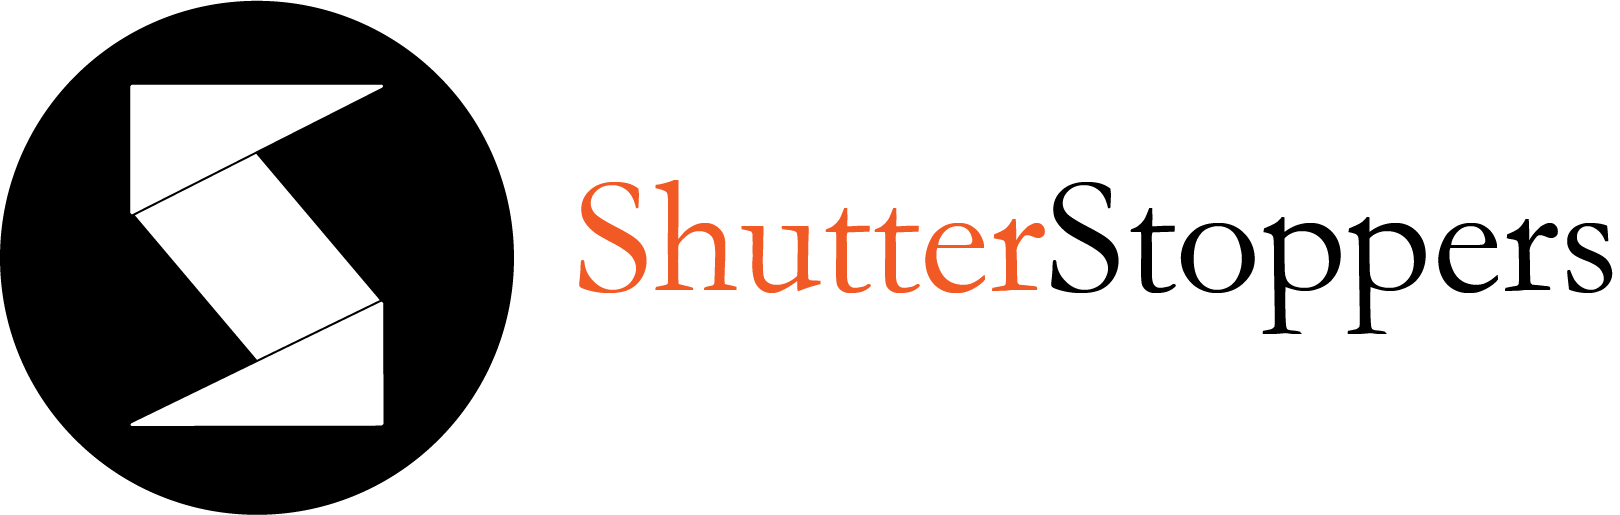 Shutterstoppers